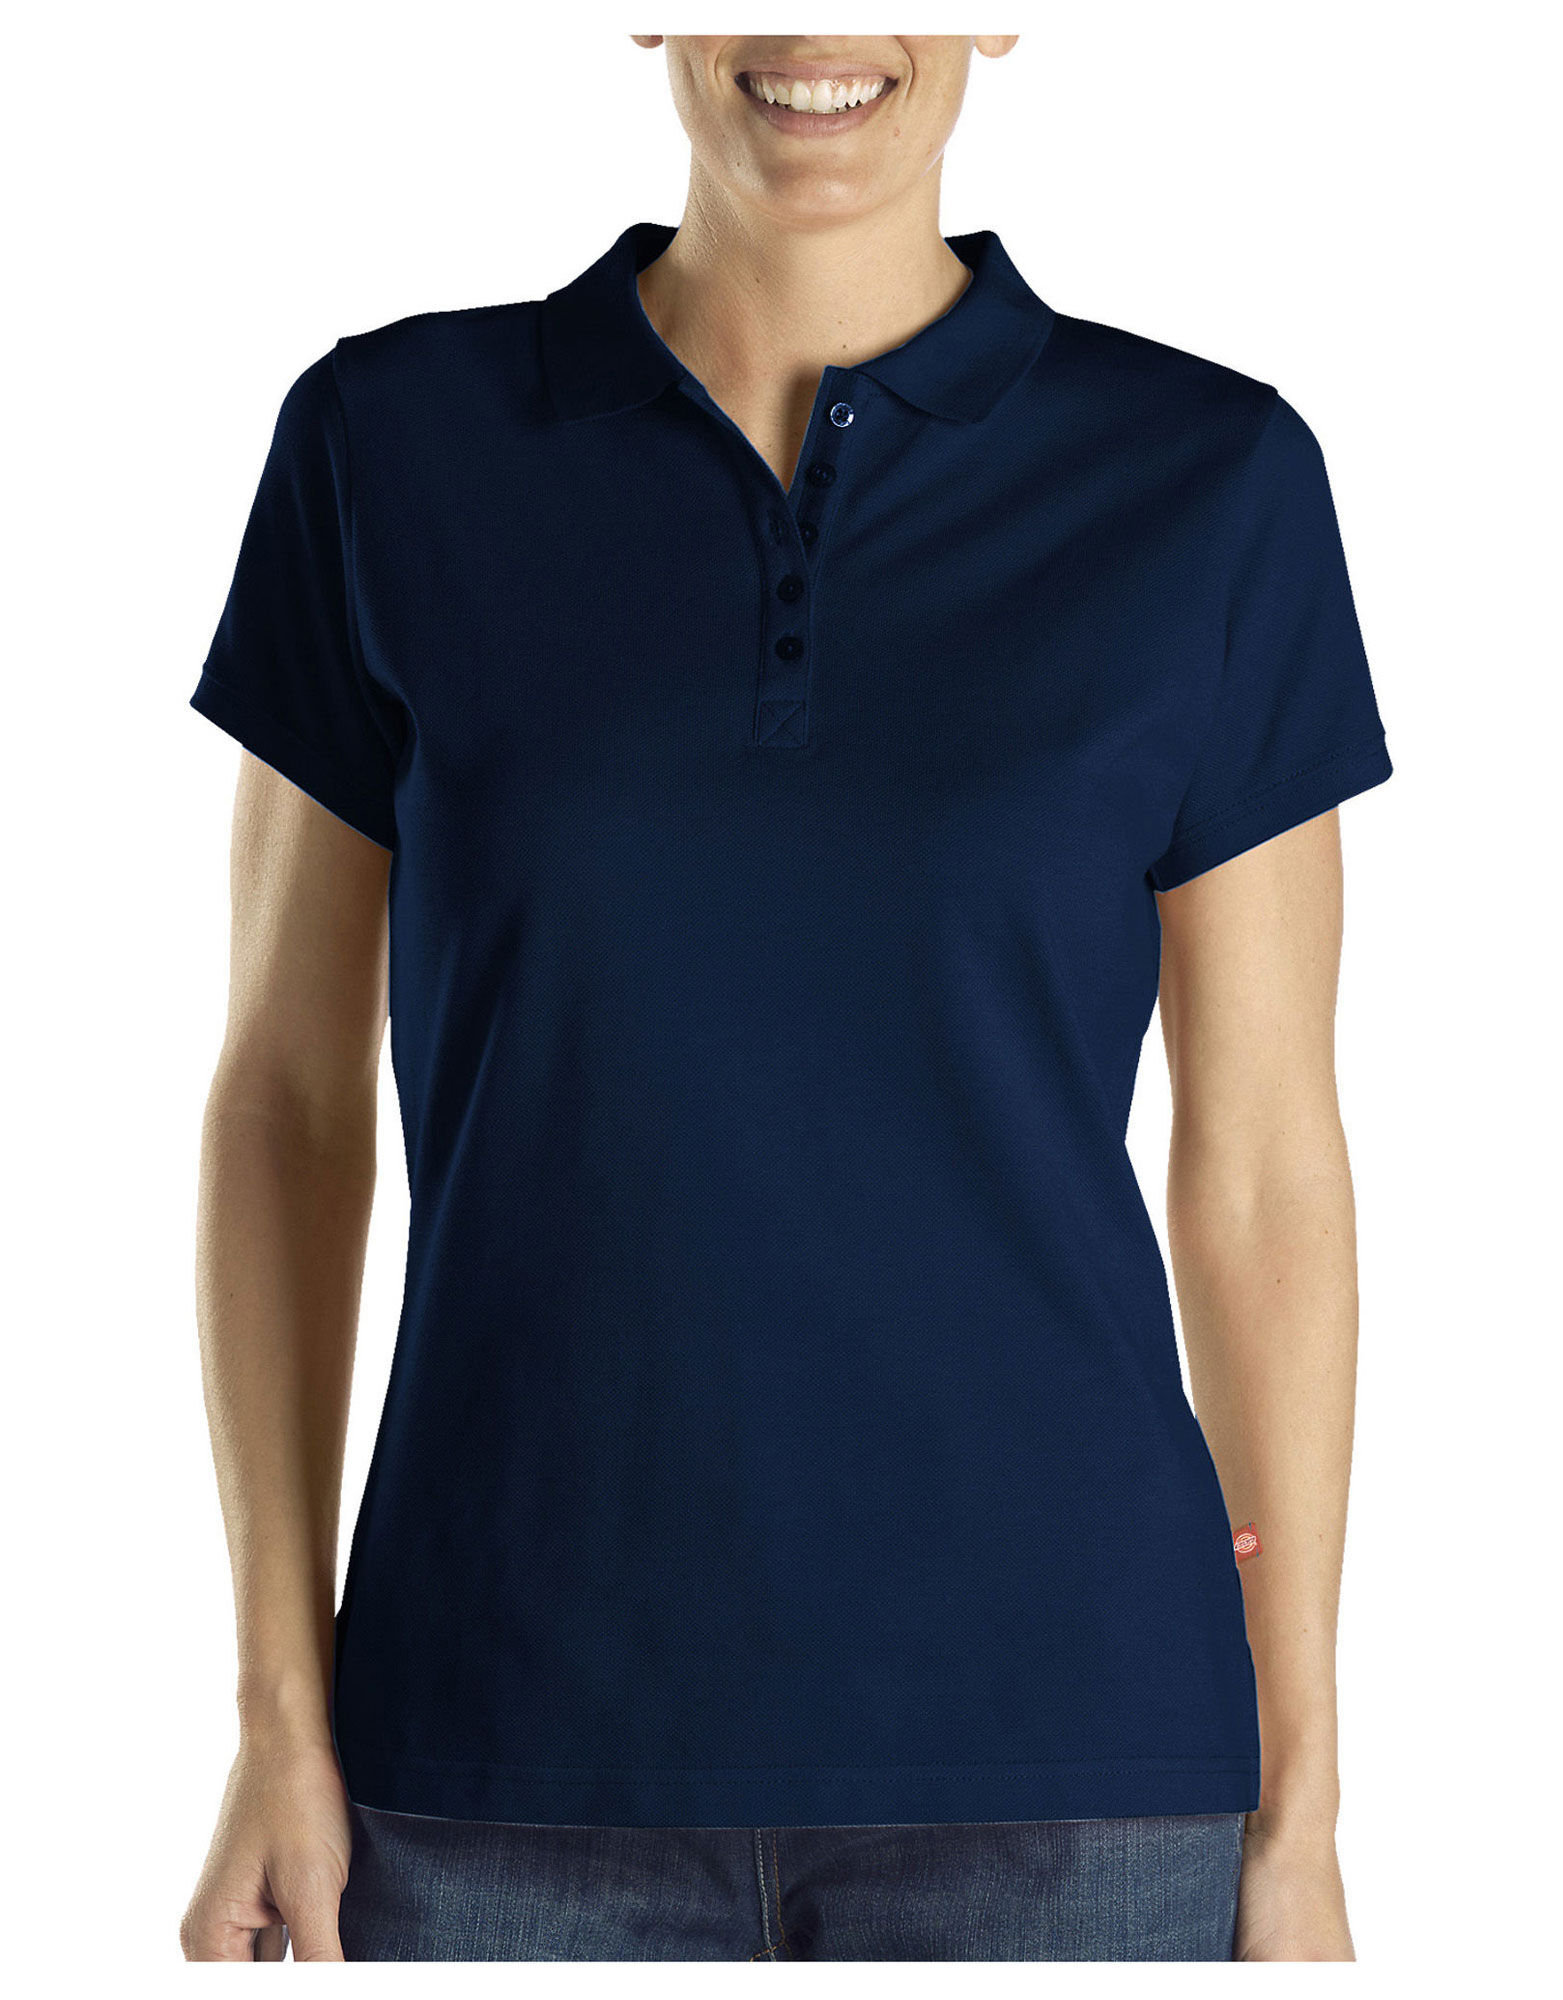 navy blue polo shirt womens